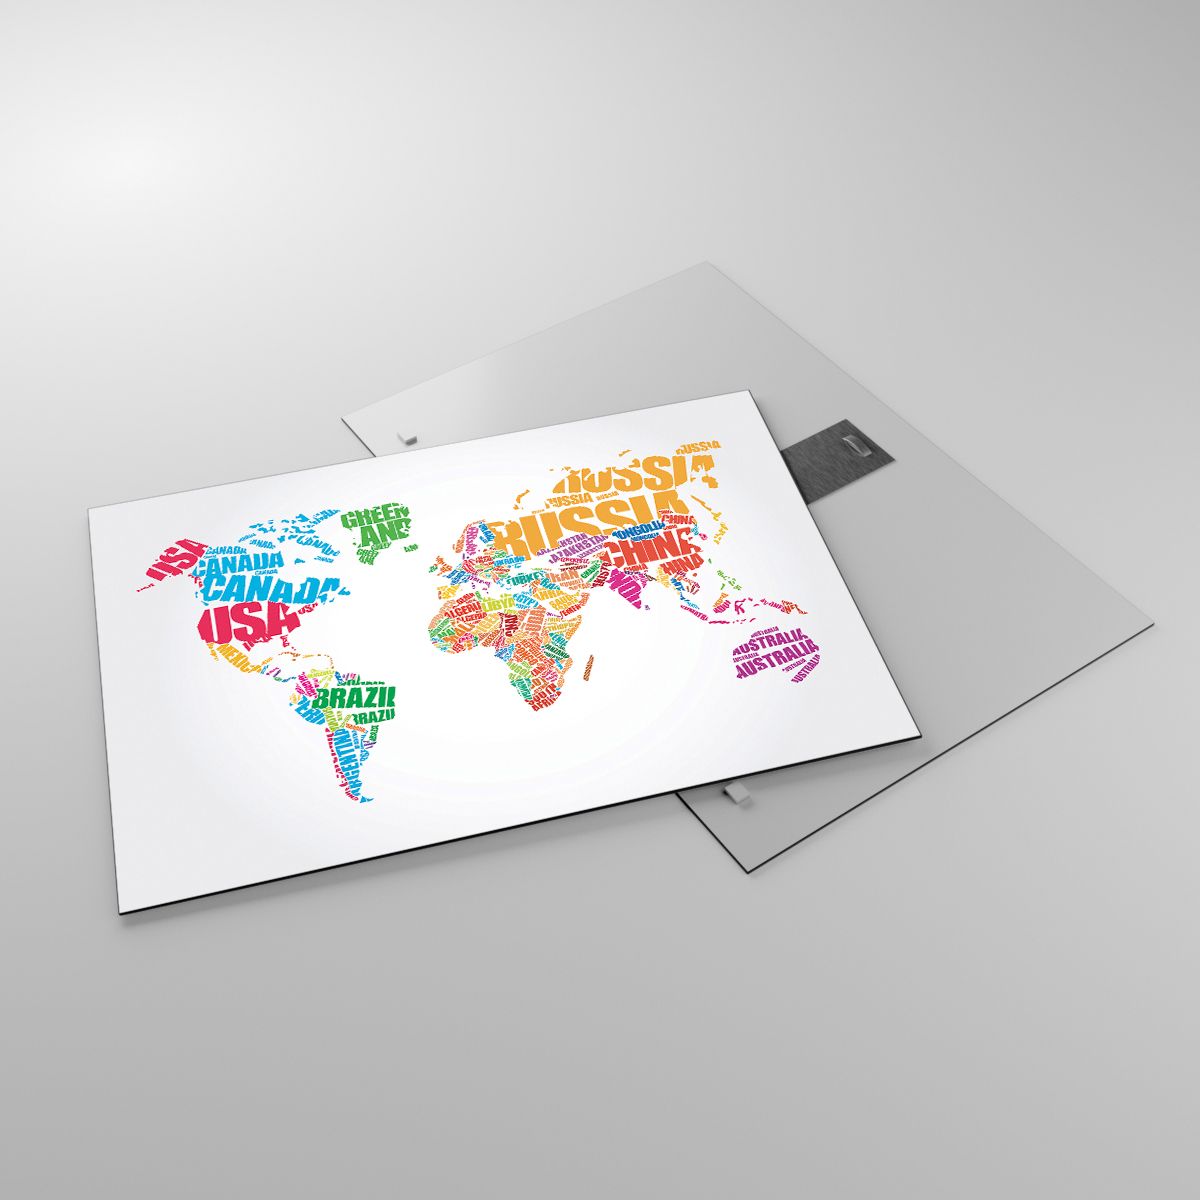 Glasbild Weltkarte, Glasbild Grafik, Glasbild Kontinente, Glasbild Planet, Glasbild Reisen